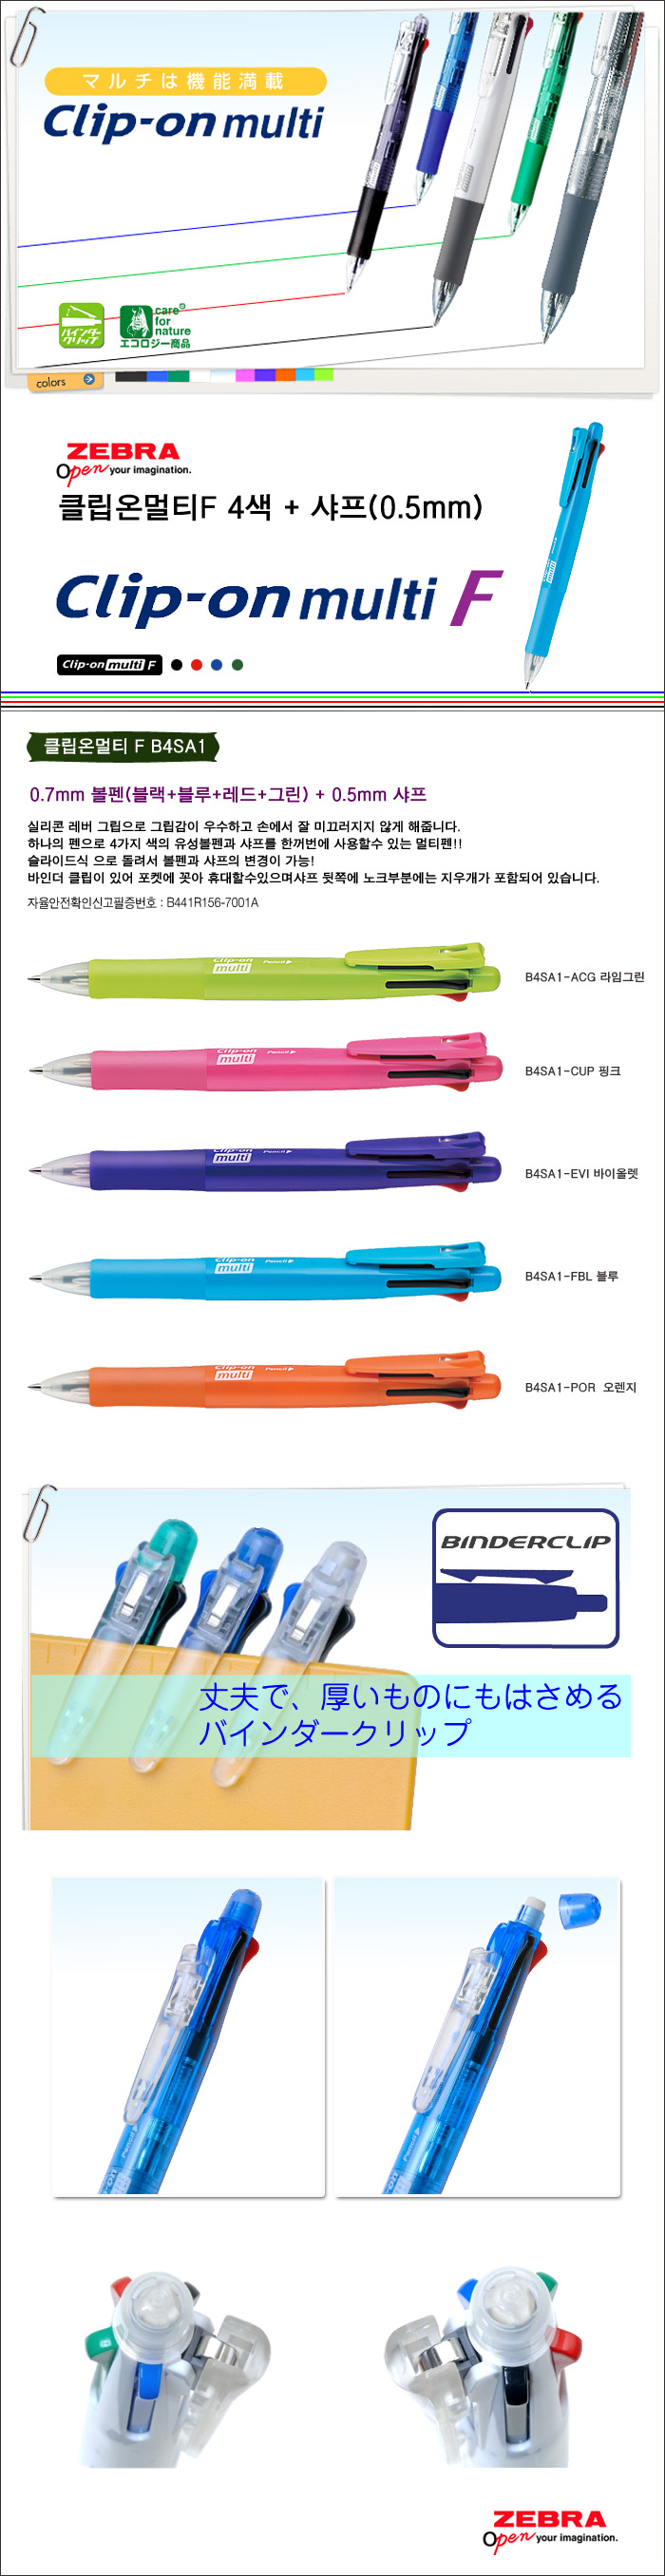 ZEBRA/Clip-on mulit F (B4SA1)/4 Color pen